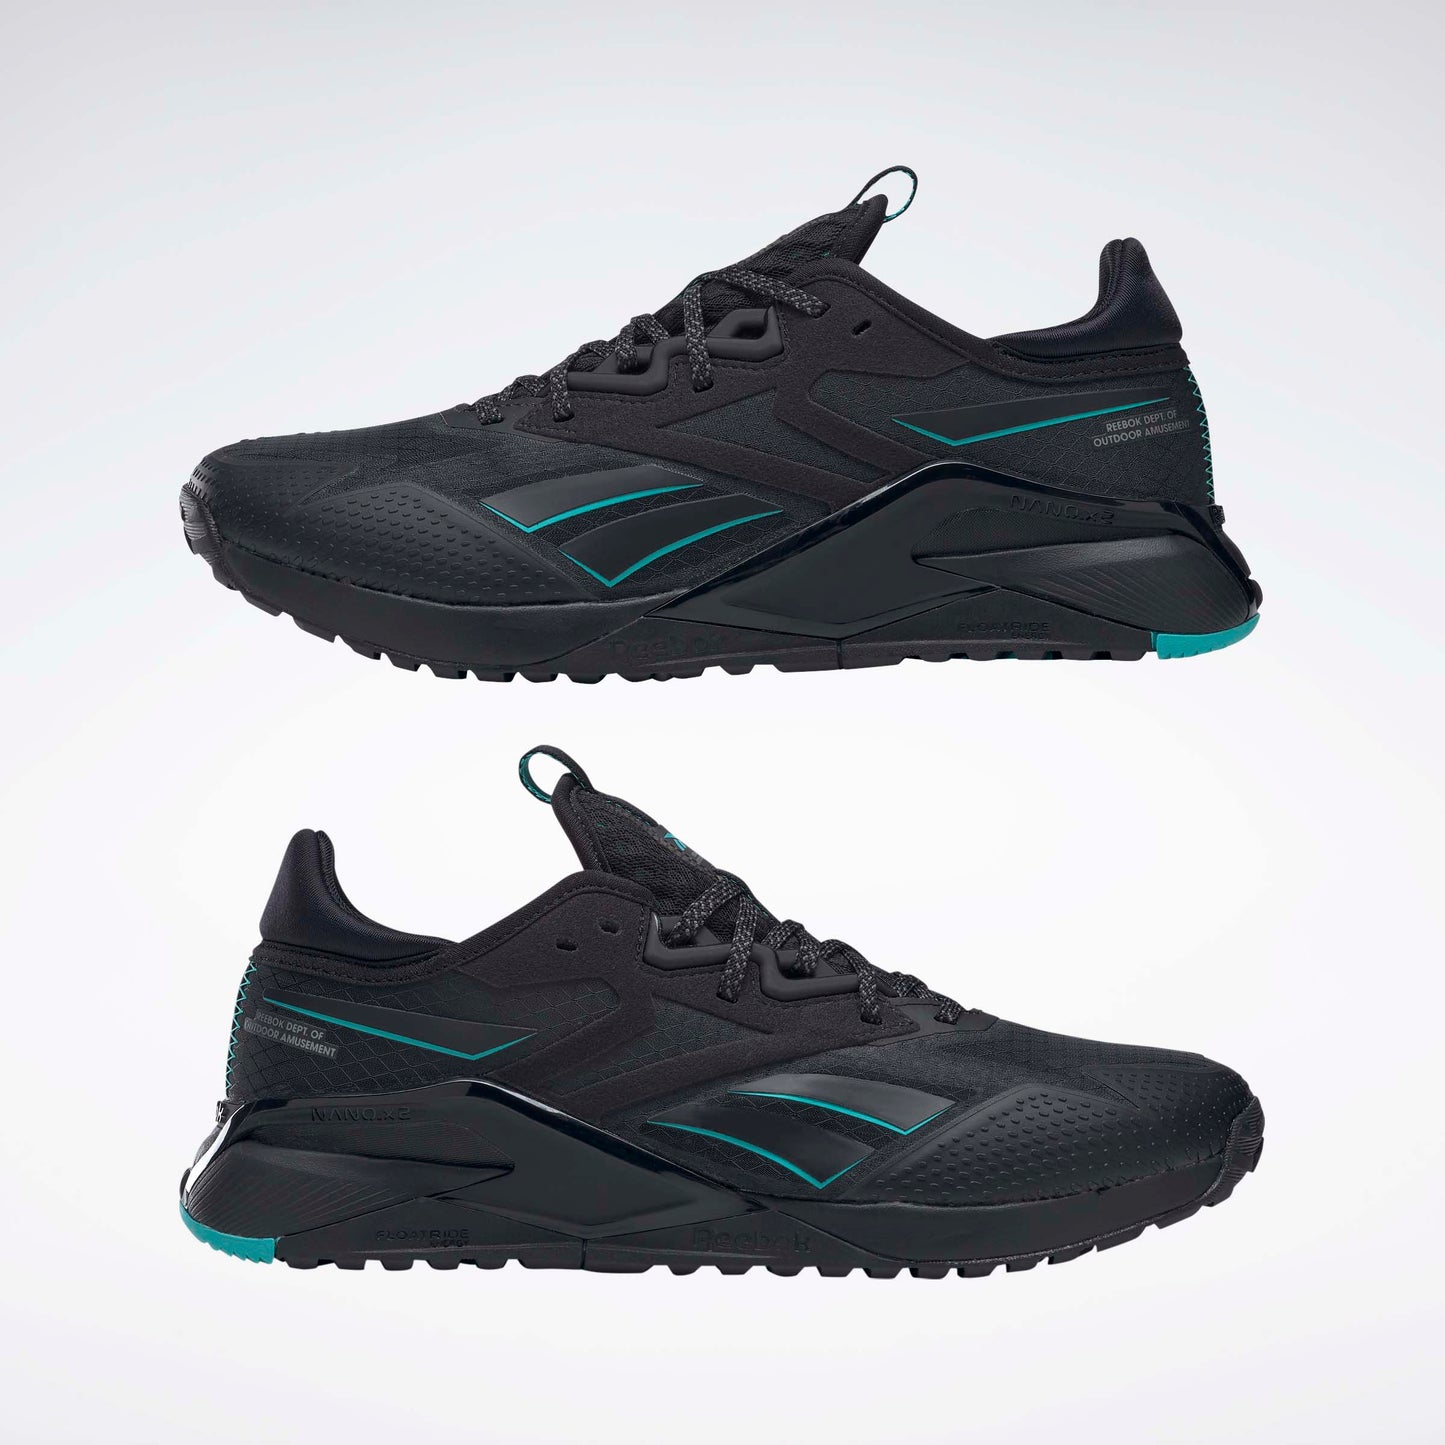 Nano X2 TR Adventure Women's Shoes Black/Teal/Pure Grey 6